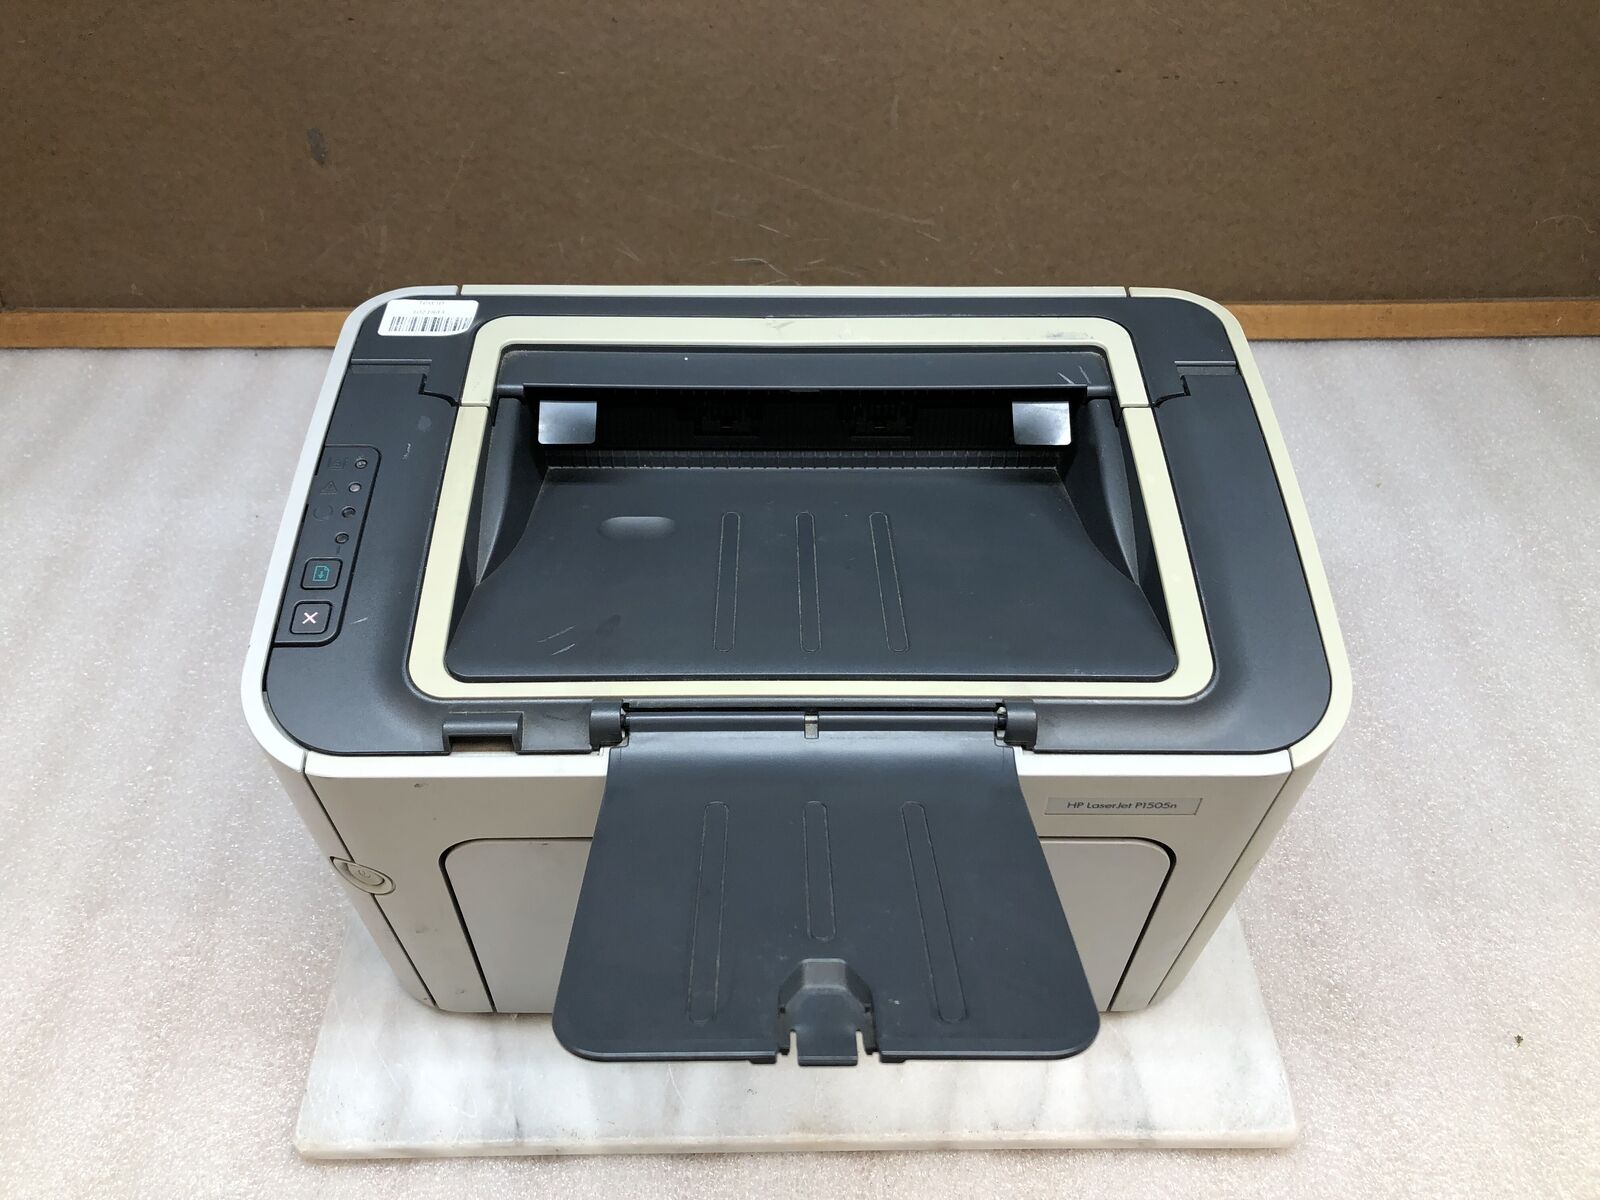 HP LaserJet P1505N Standard Monochrome Laser Printer with TONER, 20K Pgs TESTED